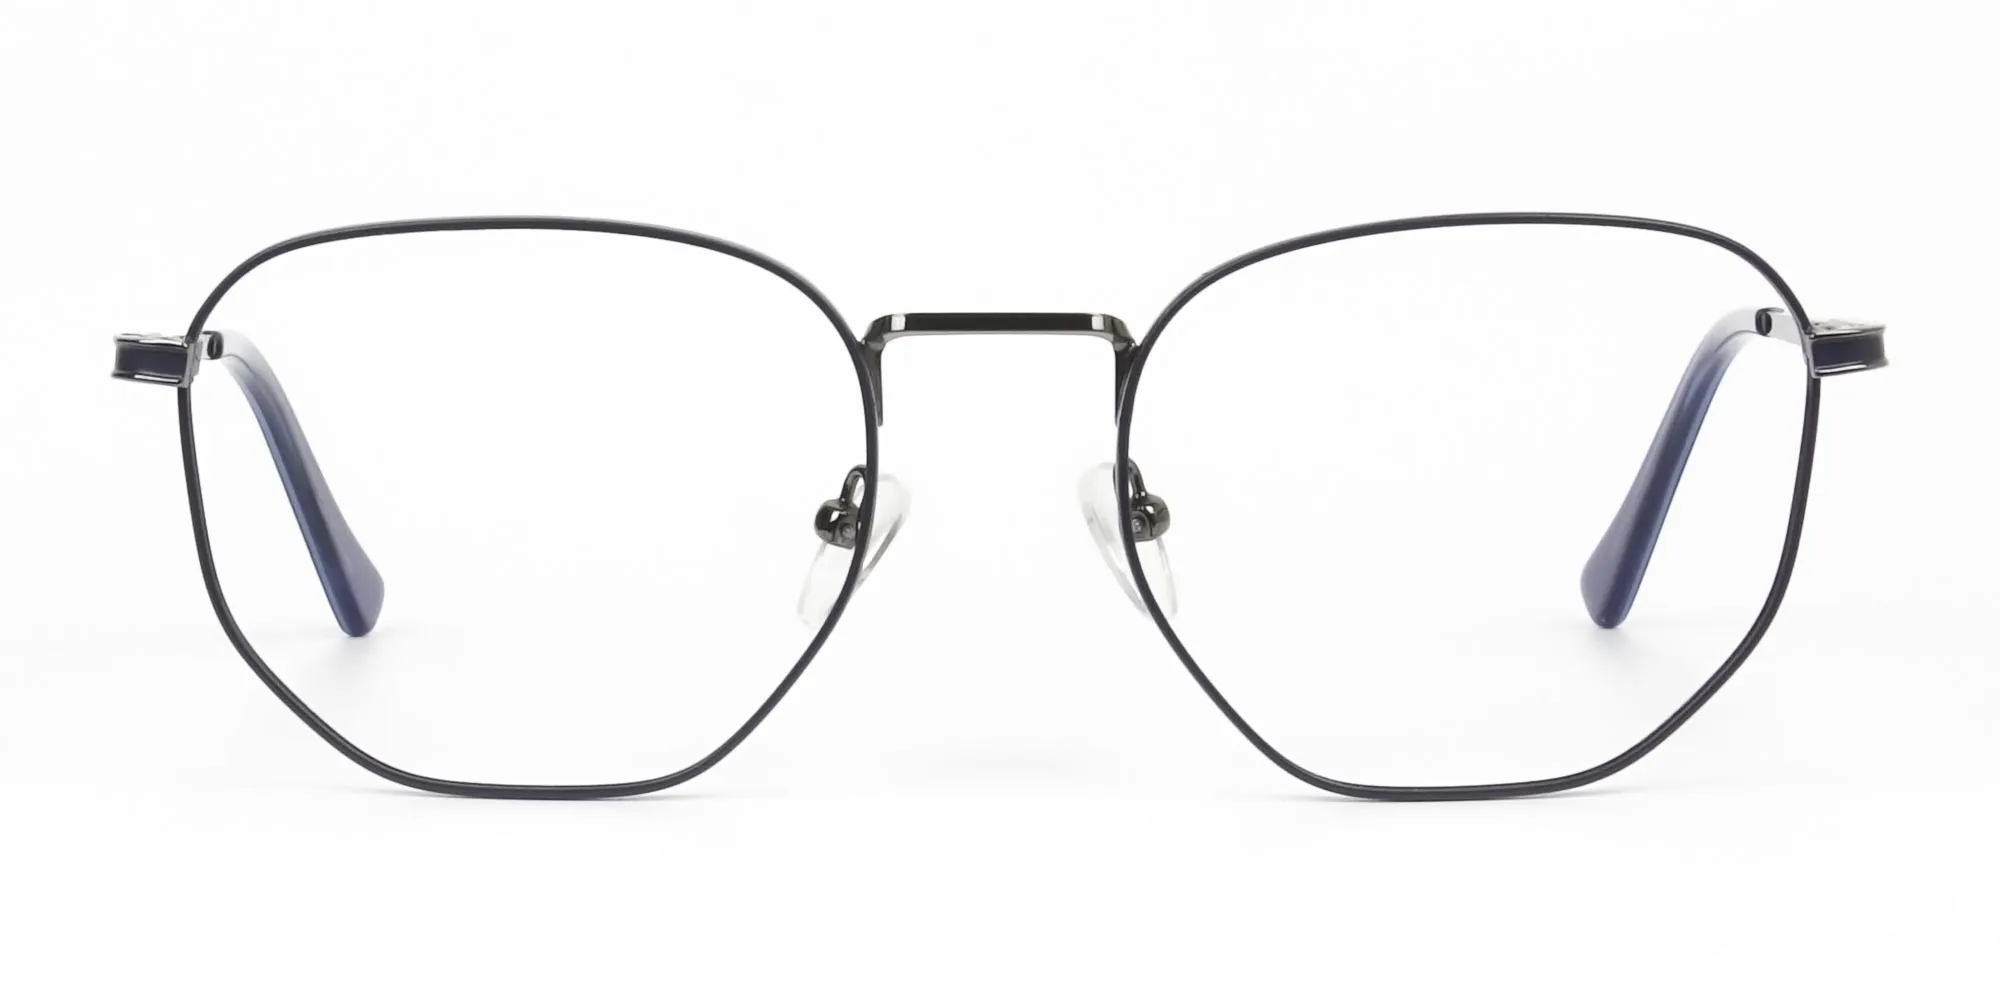 Lightweight Silver & Blue Geometric Glasses - 2